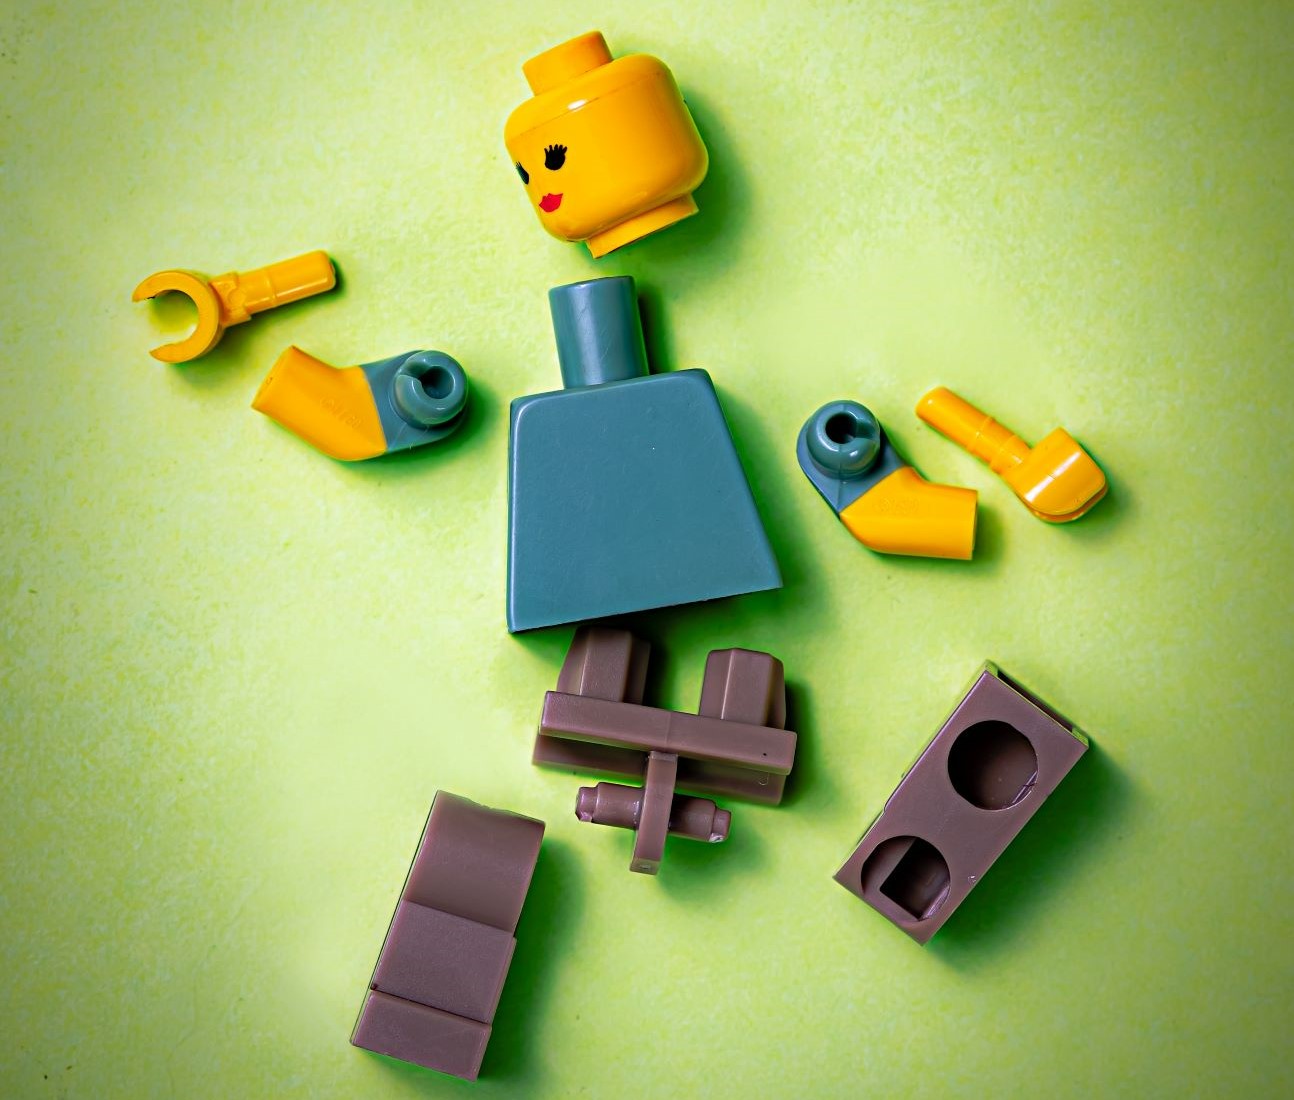 lego person in pieces